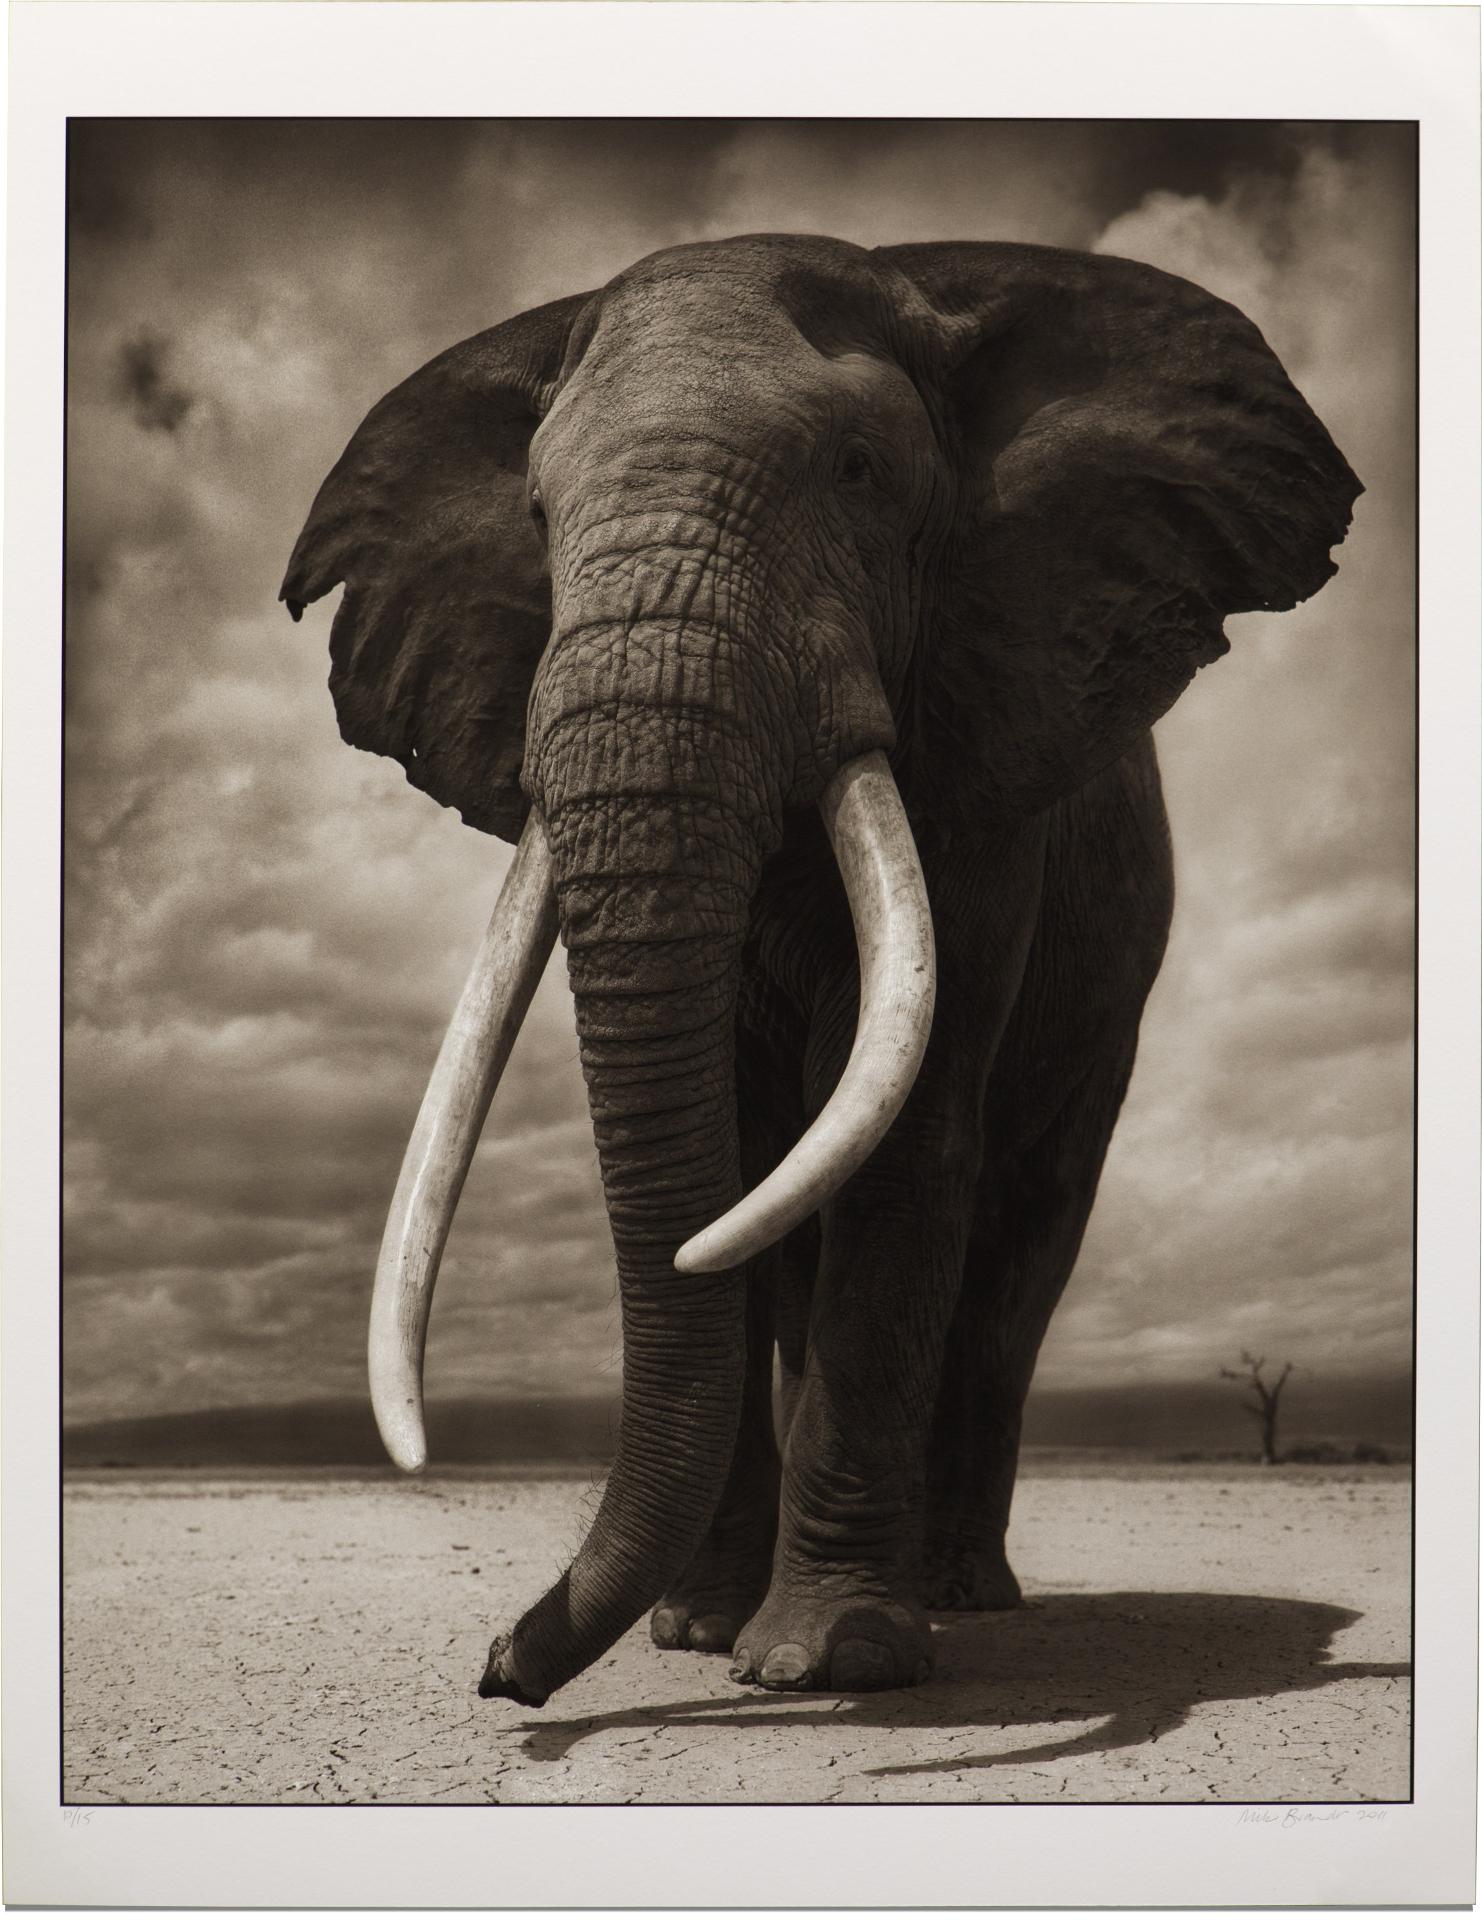 Nick Brandt (1964) - Portrait of an Elephant on Bare Earth, 2011